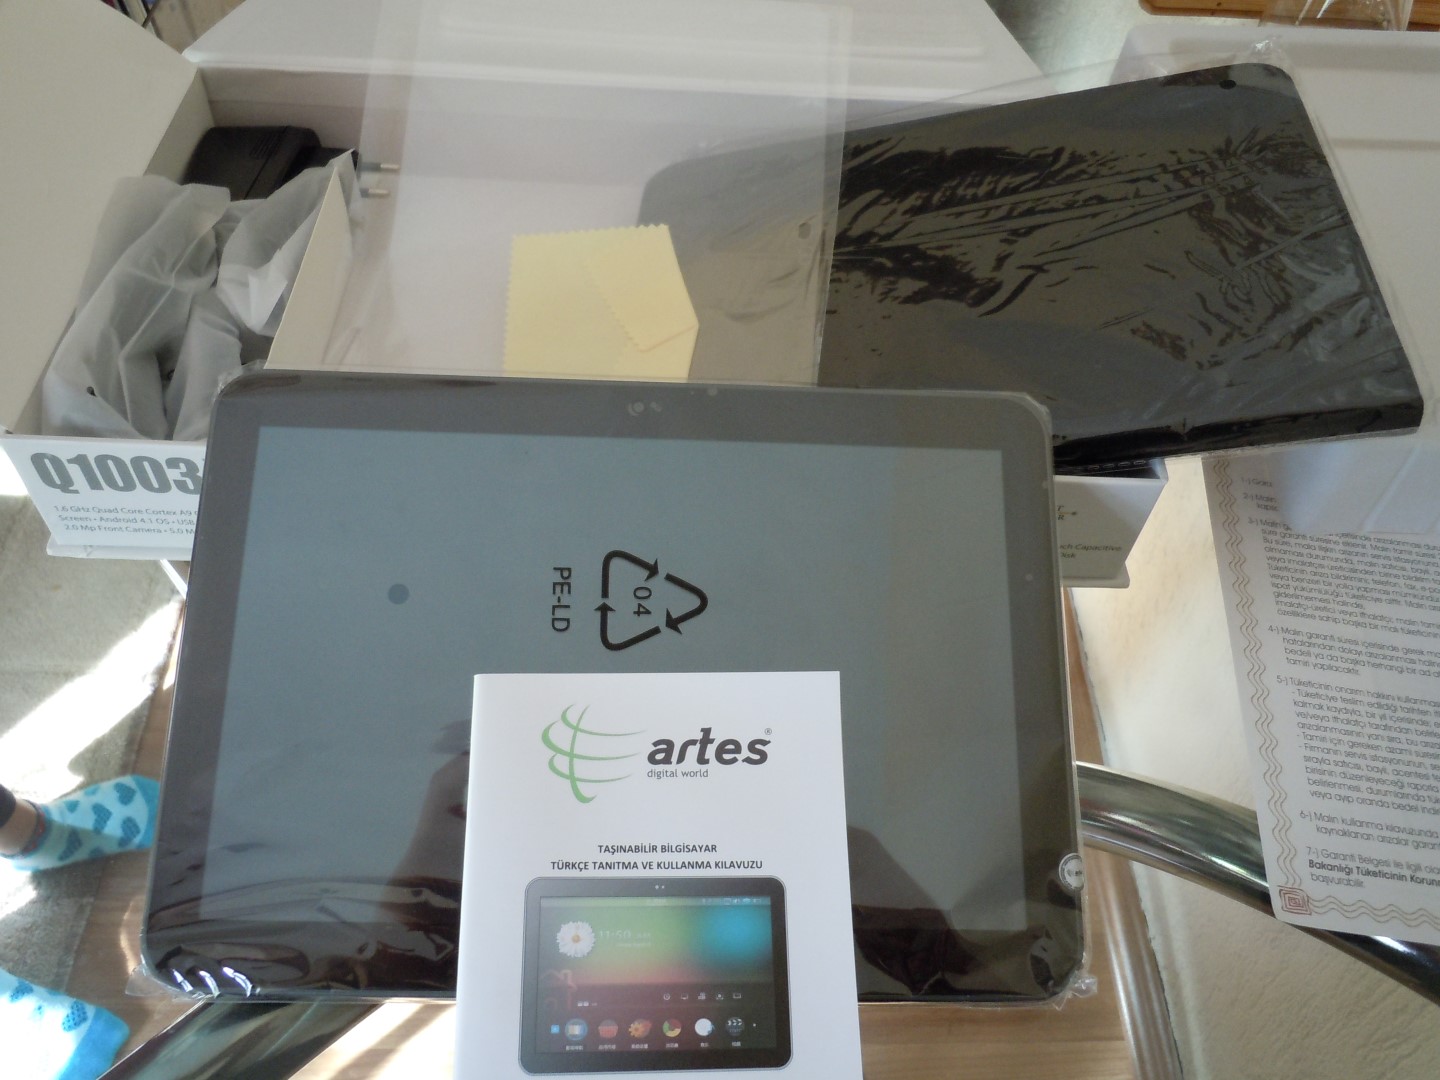  Artes Q1003 16GB 10.1' IPS Tablet almak istiyorum